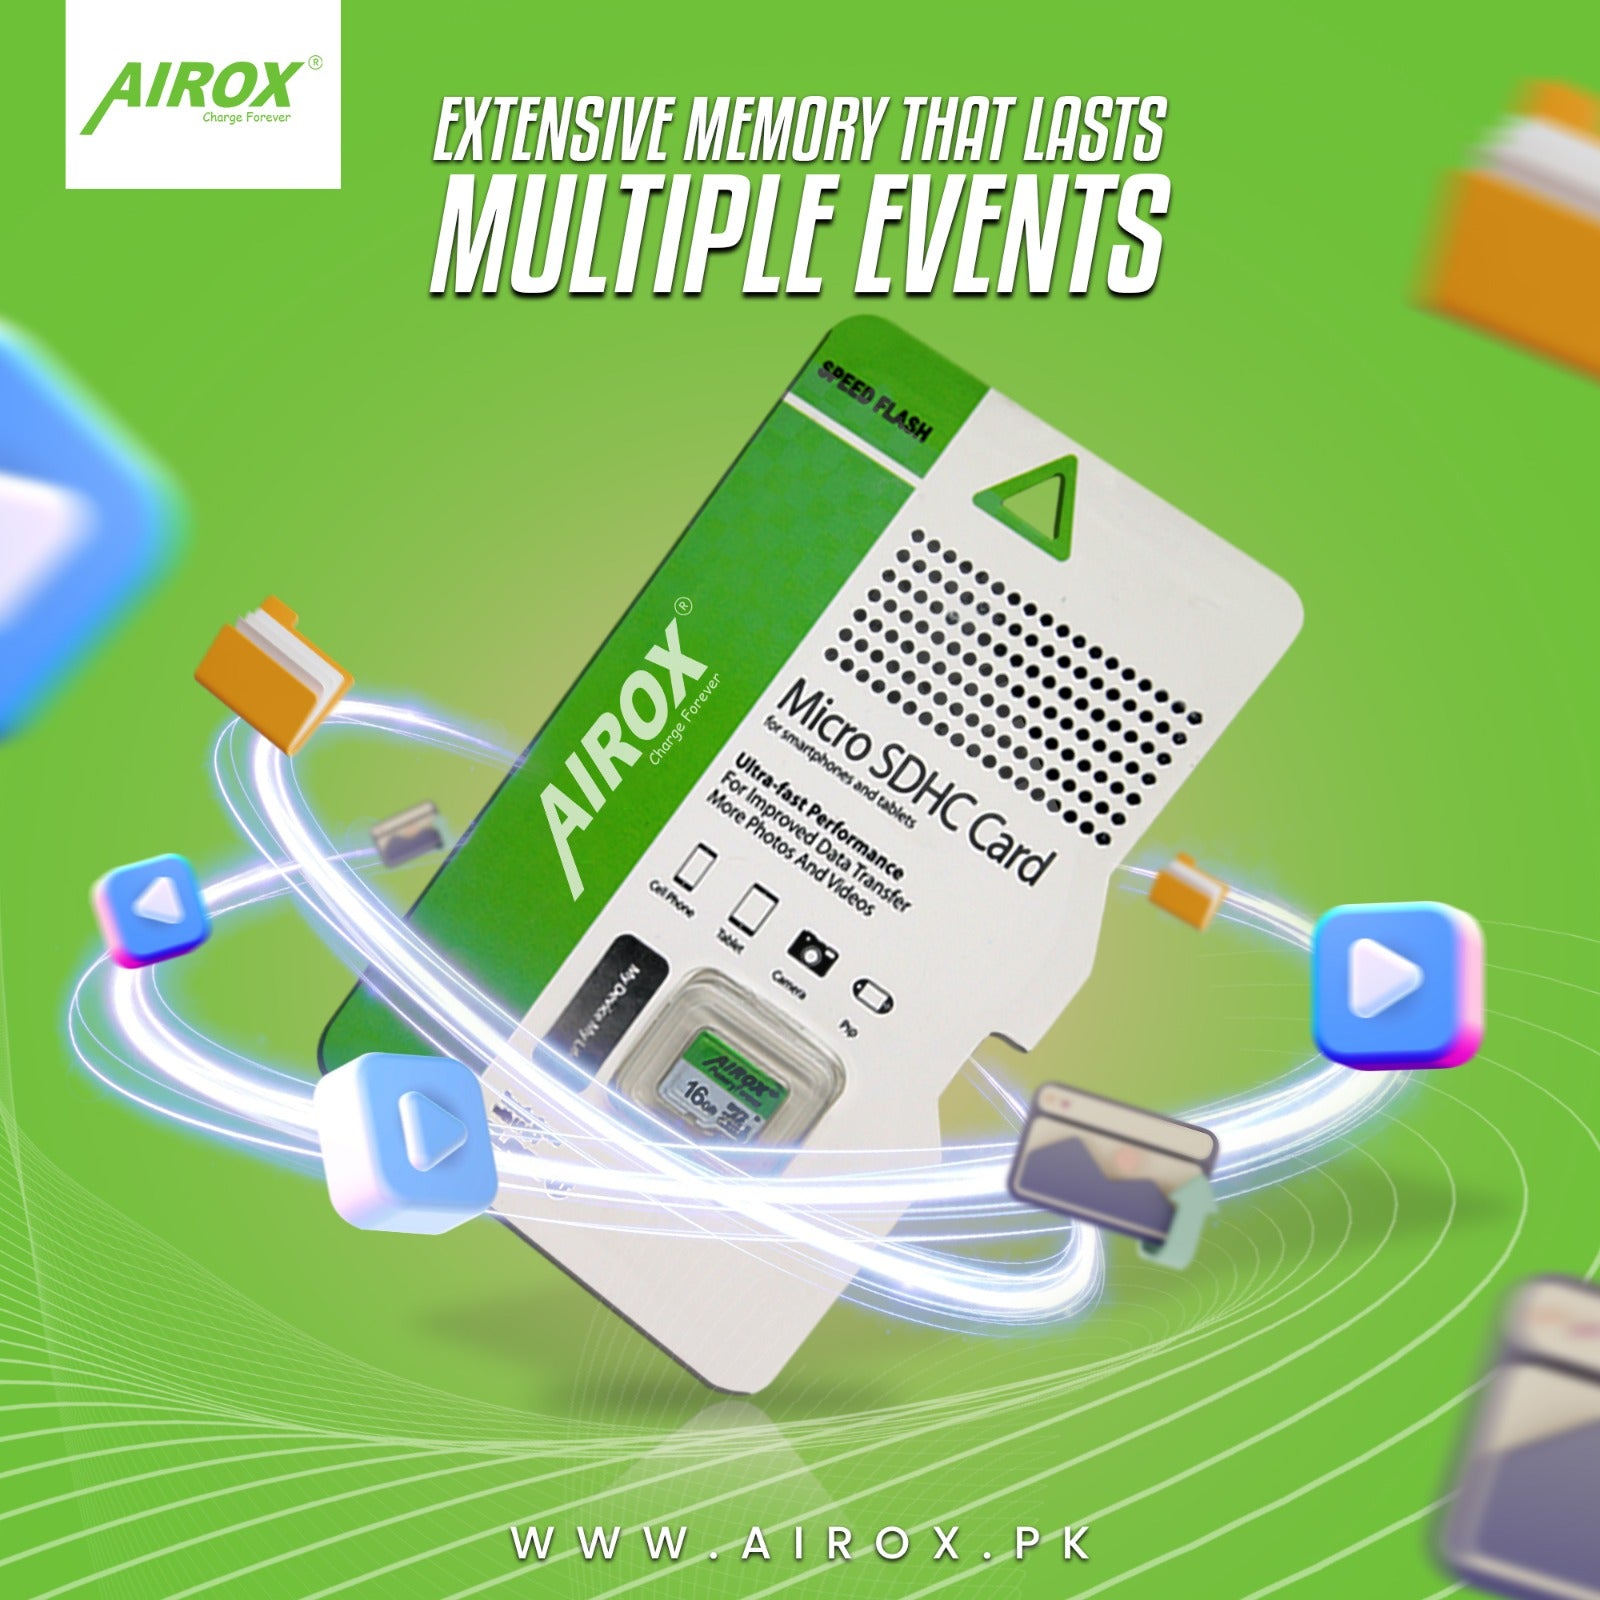 Class 10 memory cards Airox